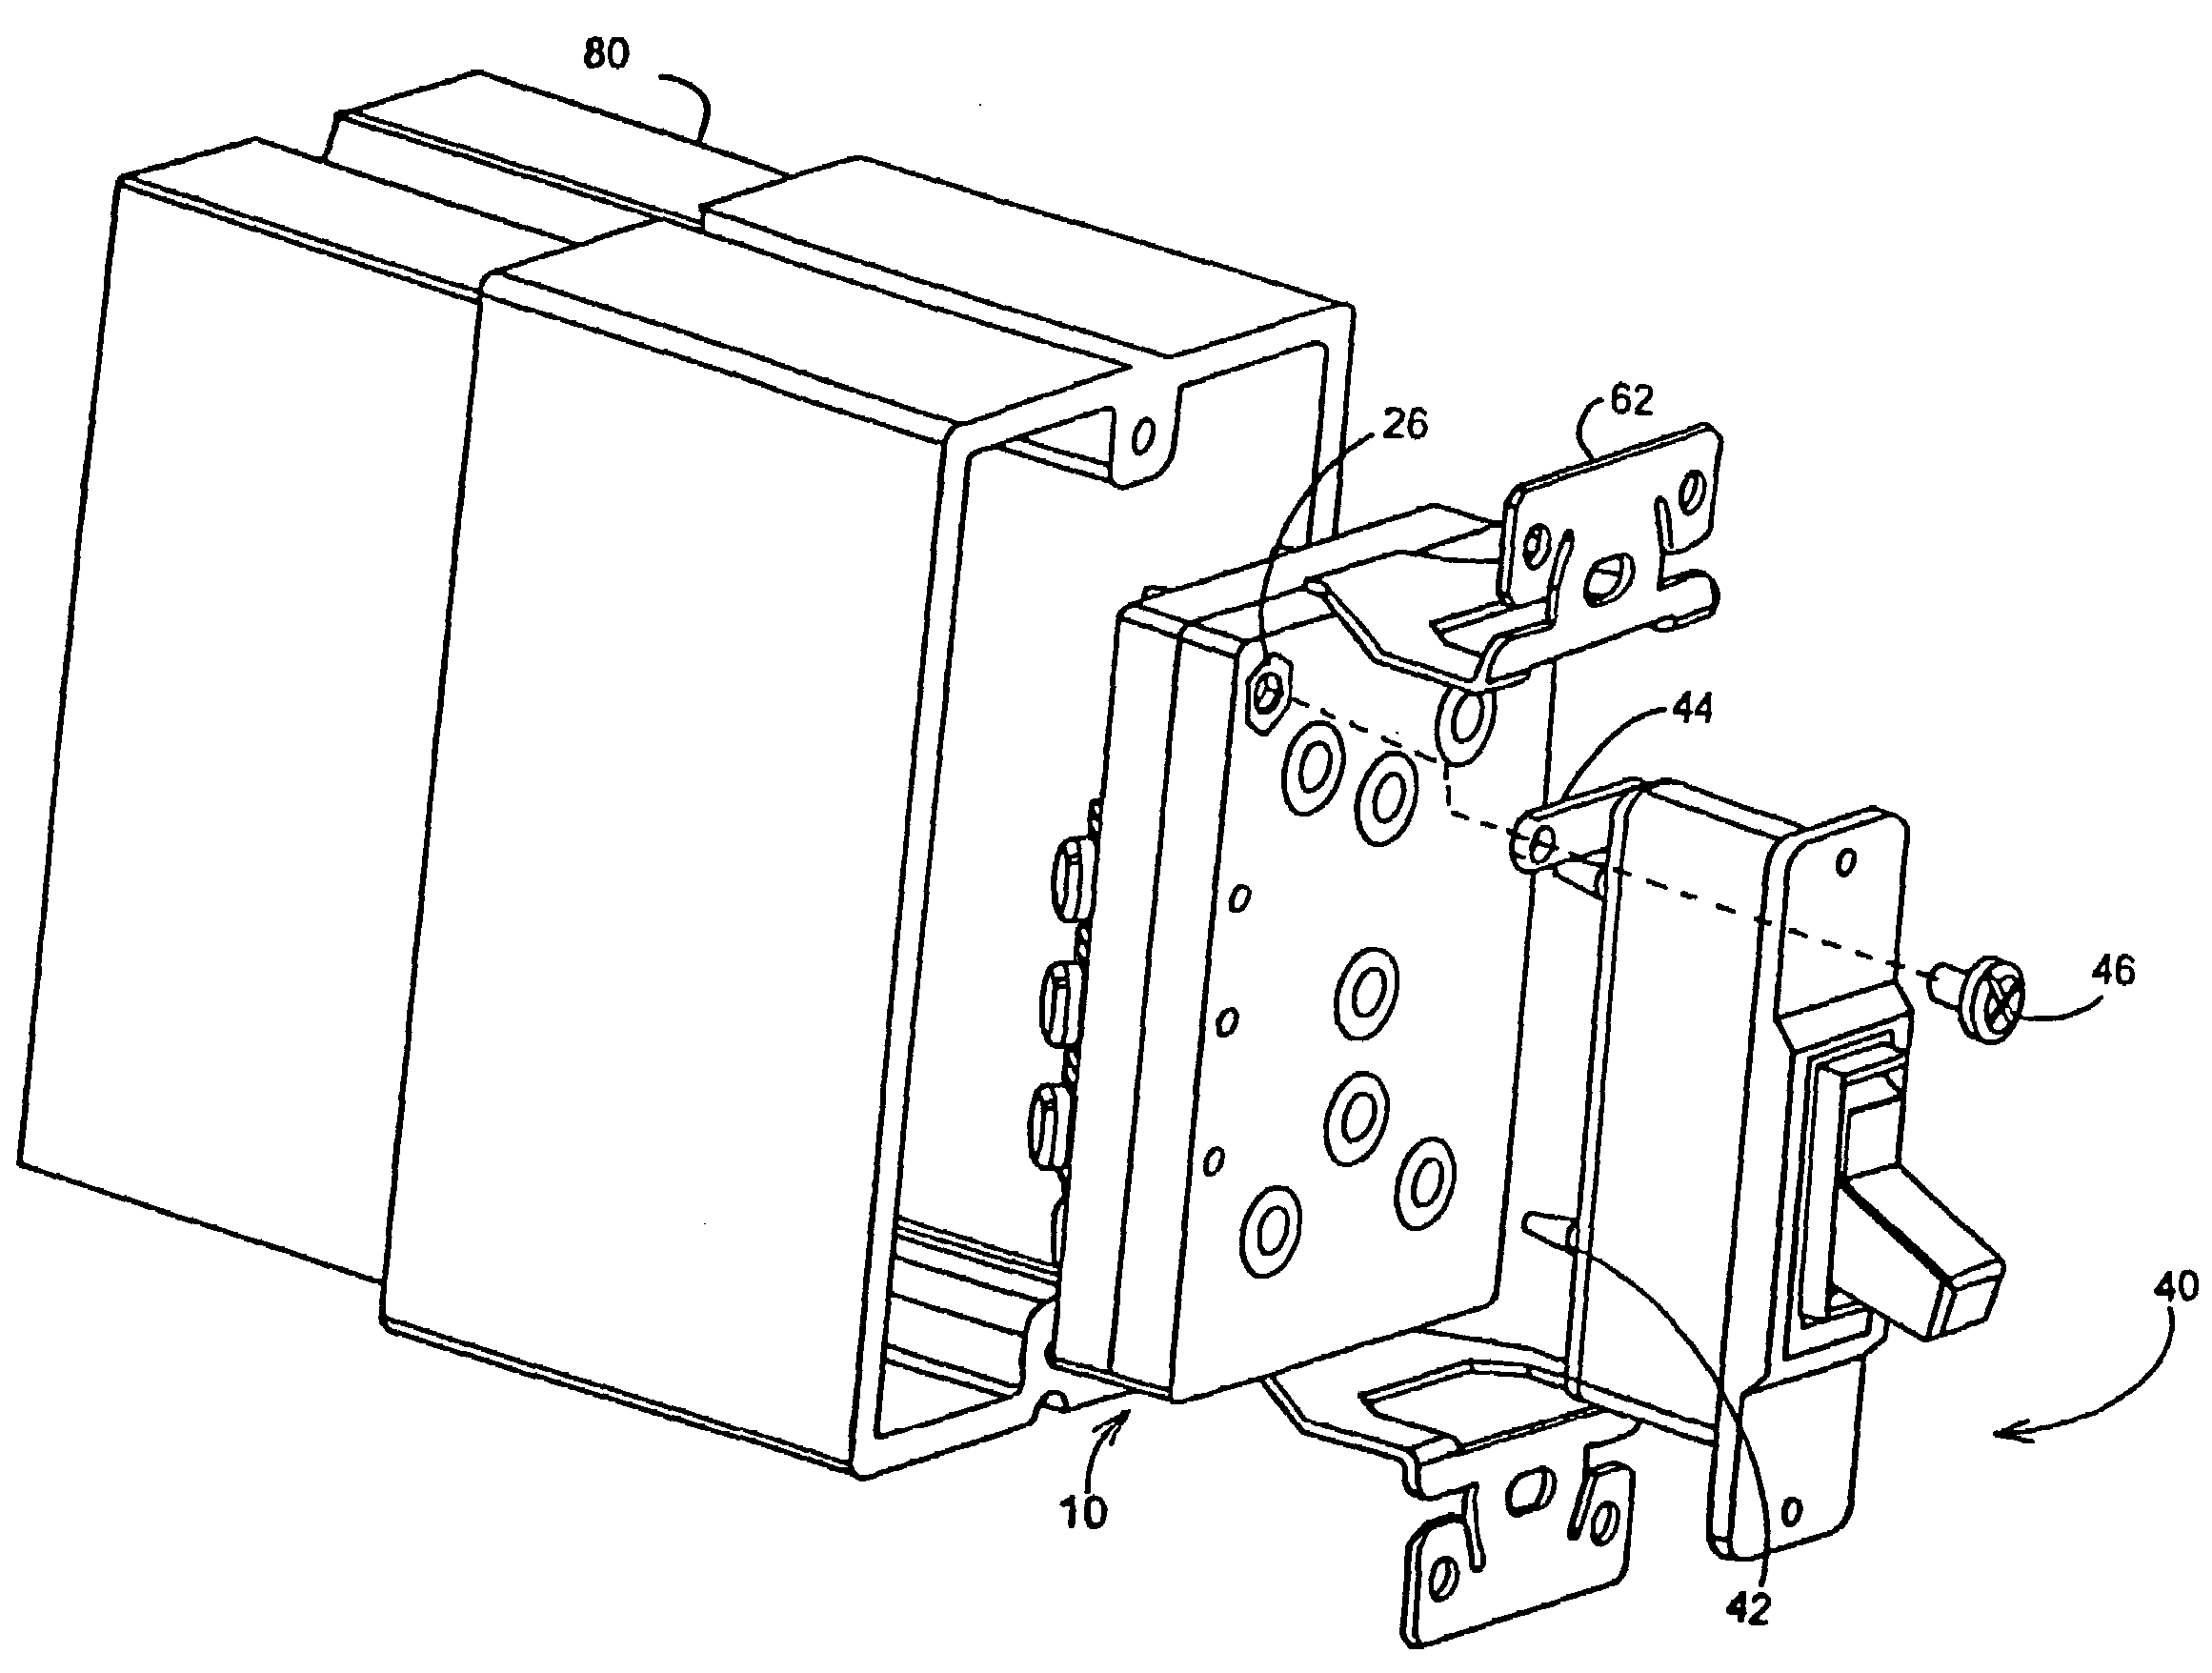 Universal electrical module